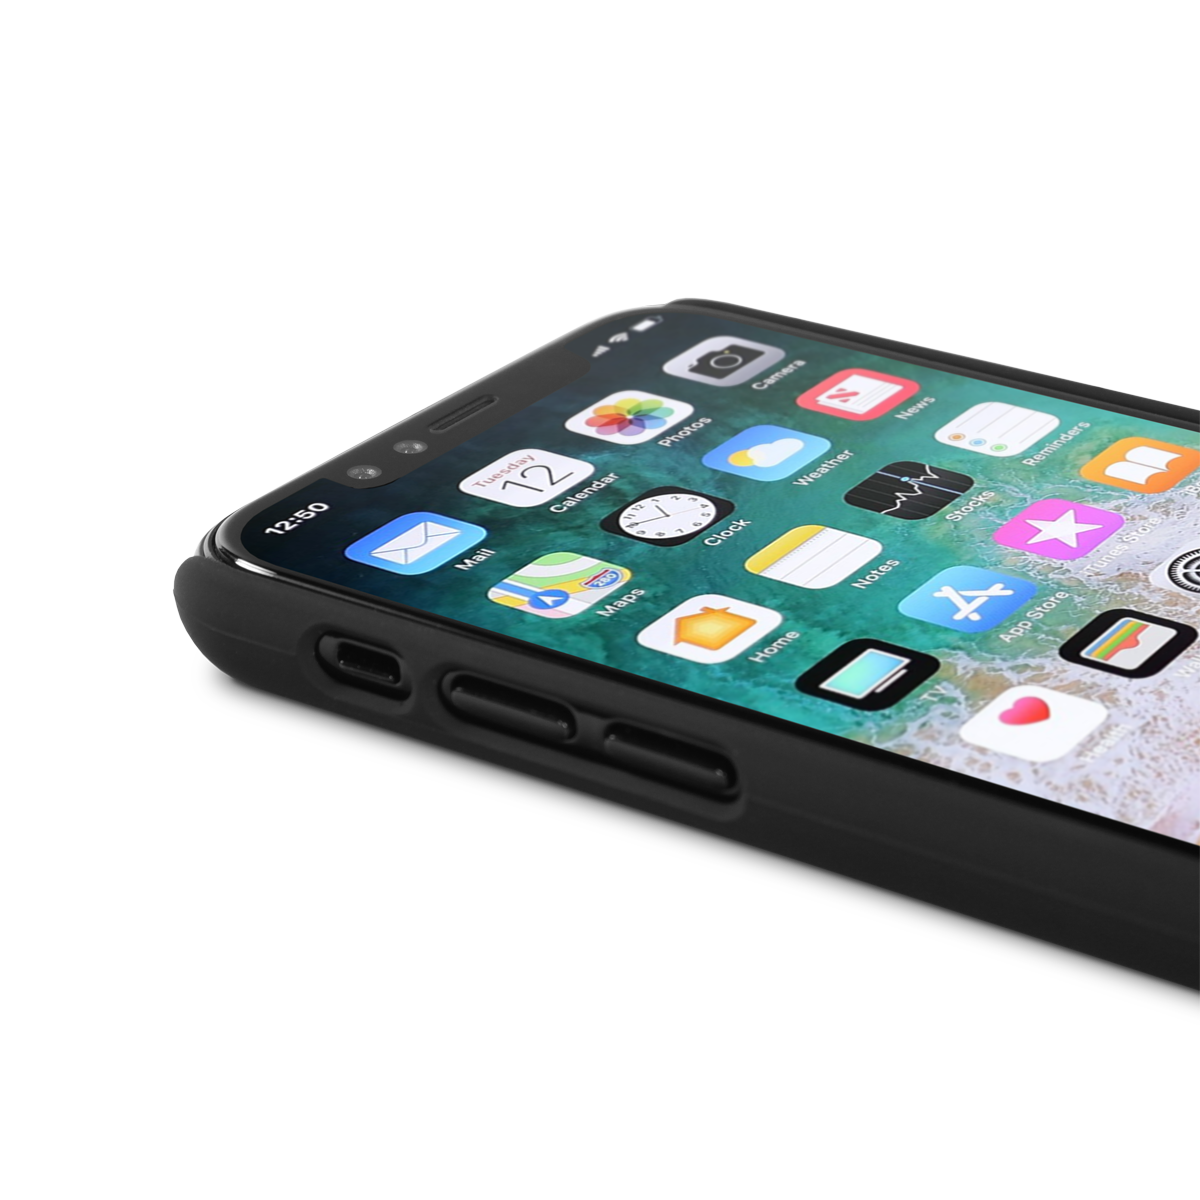 iPhone X —  #WoodBack Snap Case